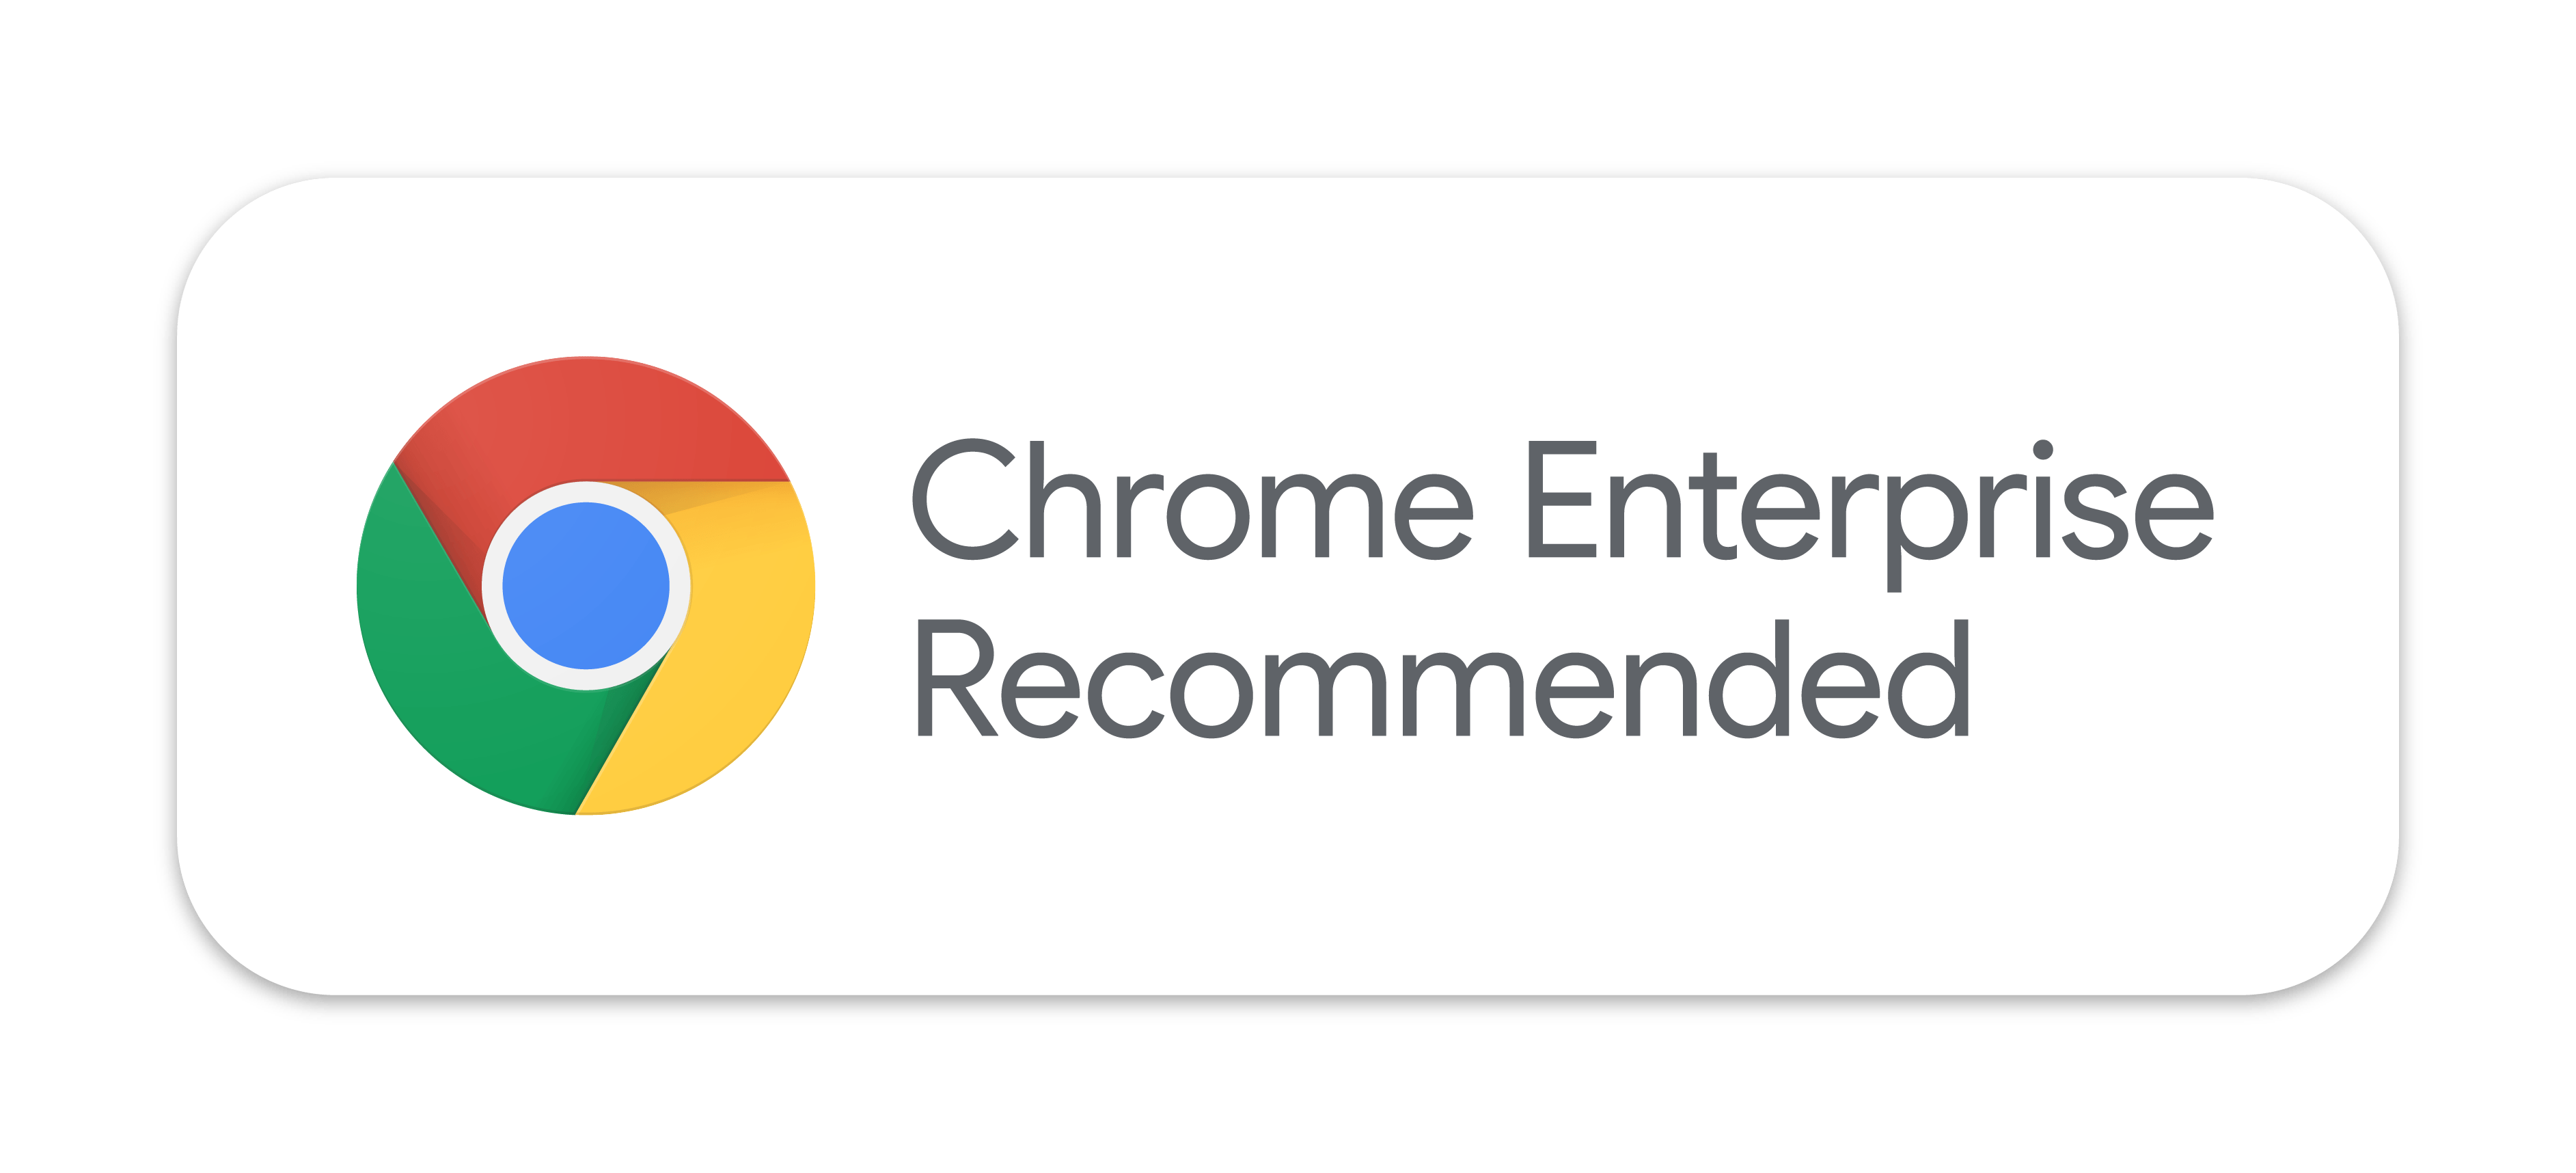 Arreya is a Chrome Enterprise Recommended Solution for Digital Signage Software